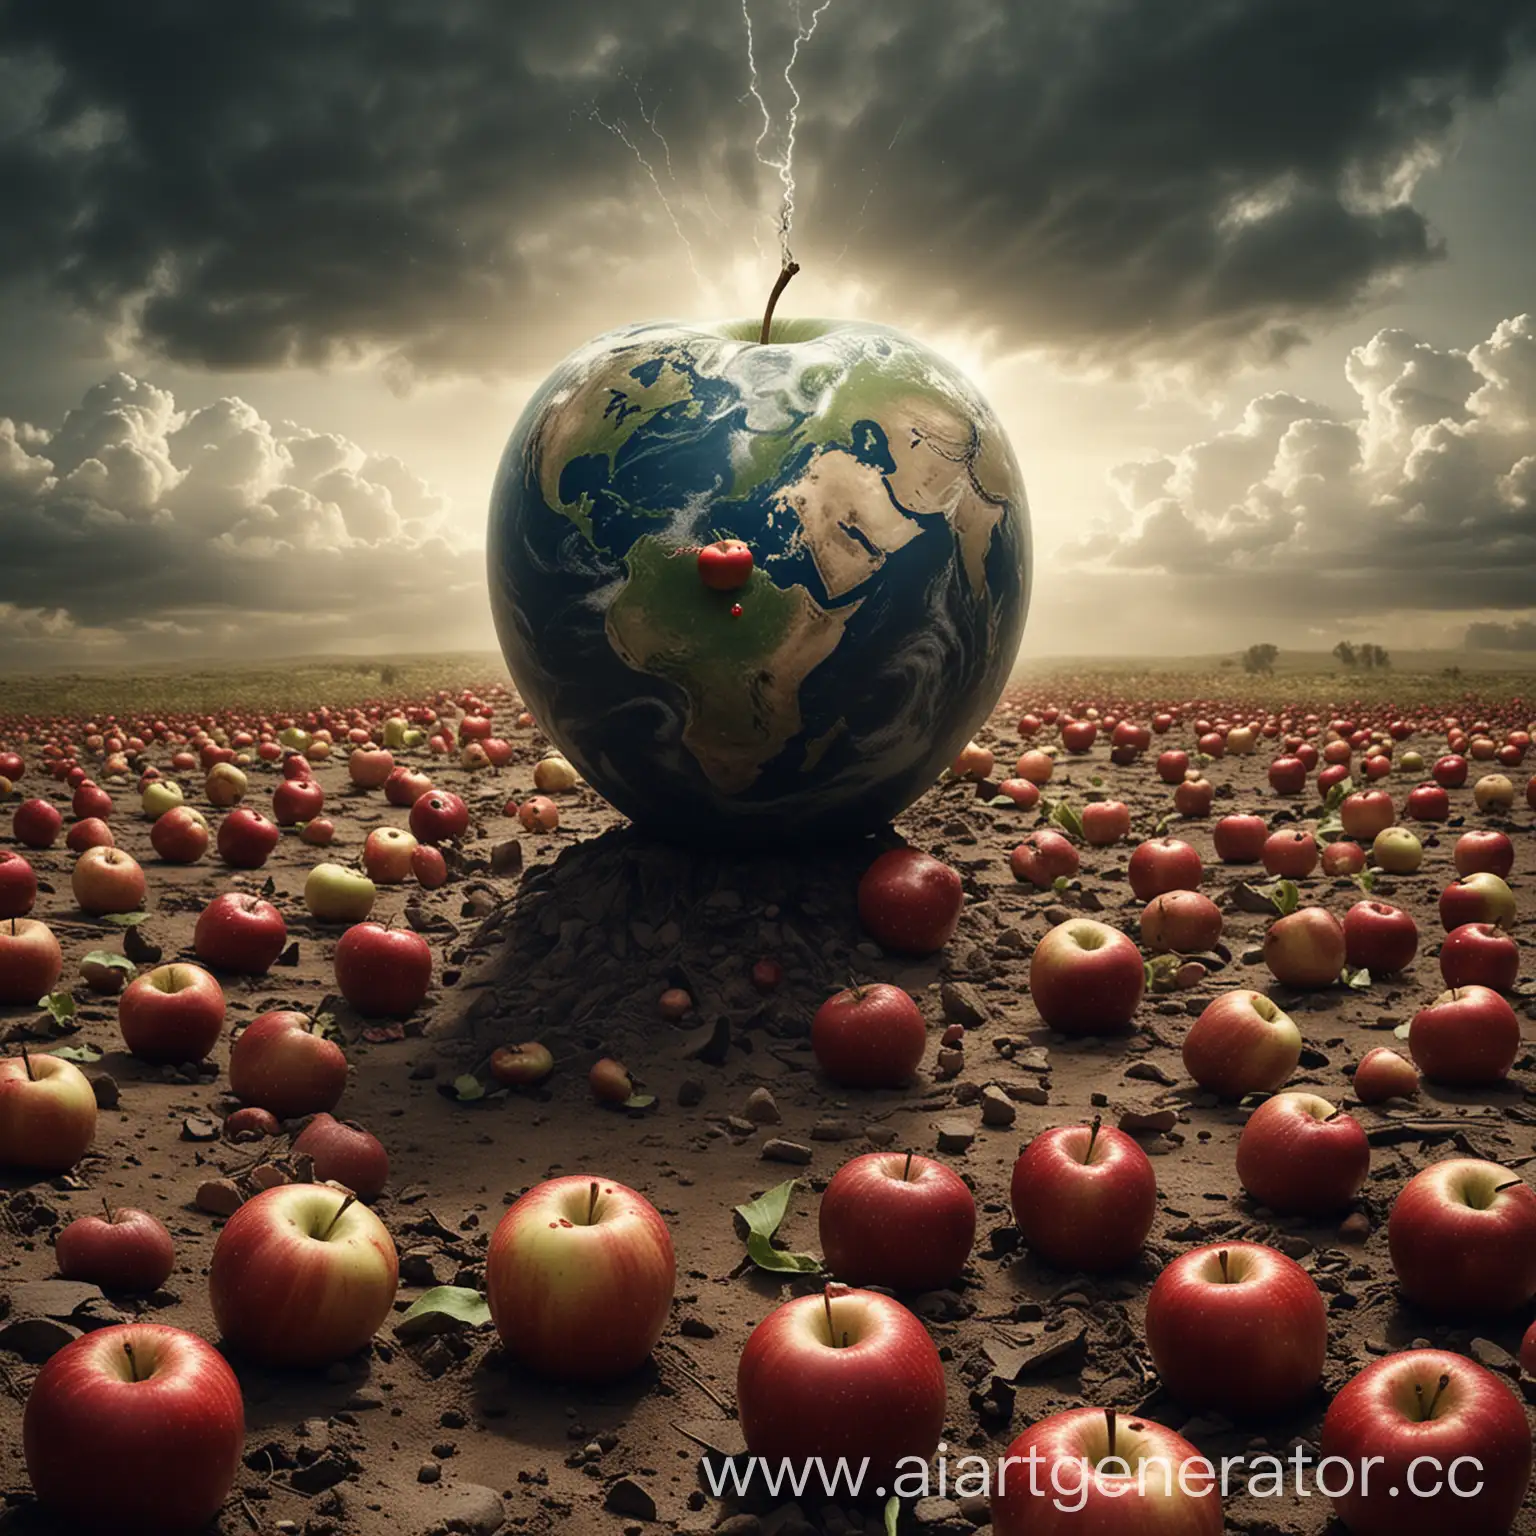 Apples-Launching-Assault-on-Earth-Fruit-Invasion-Warfare